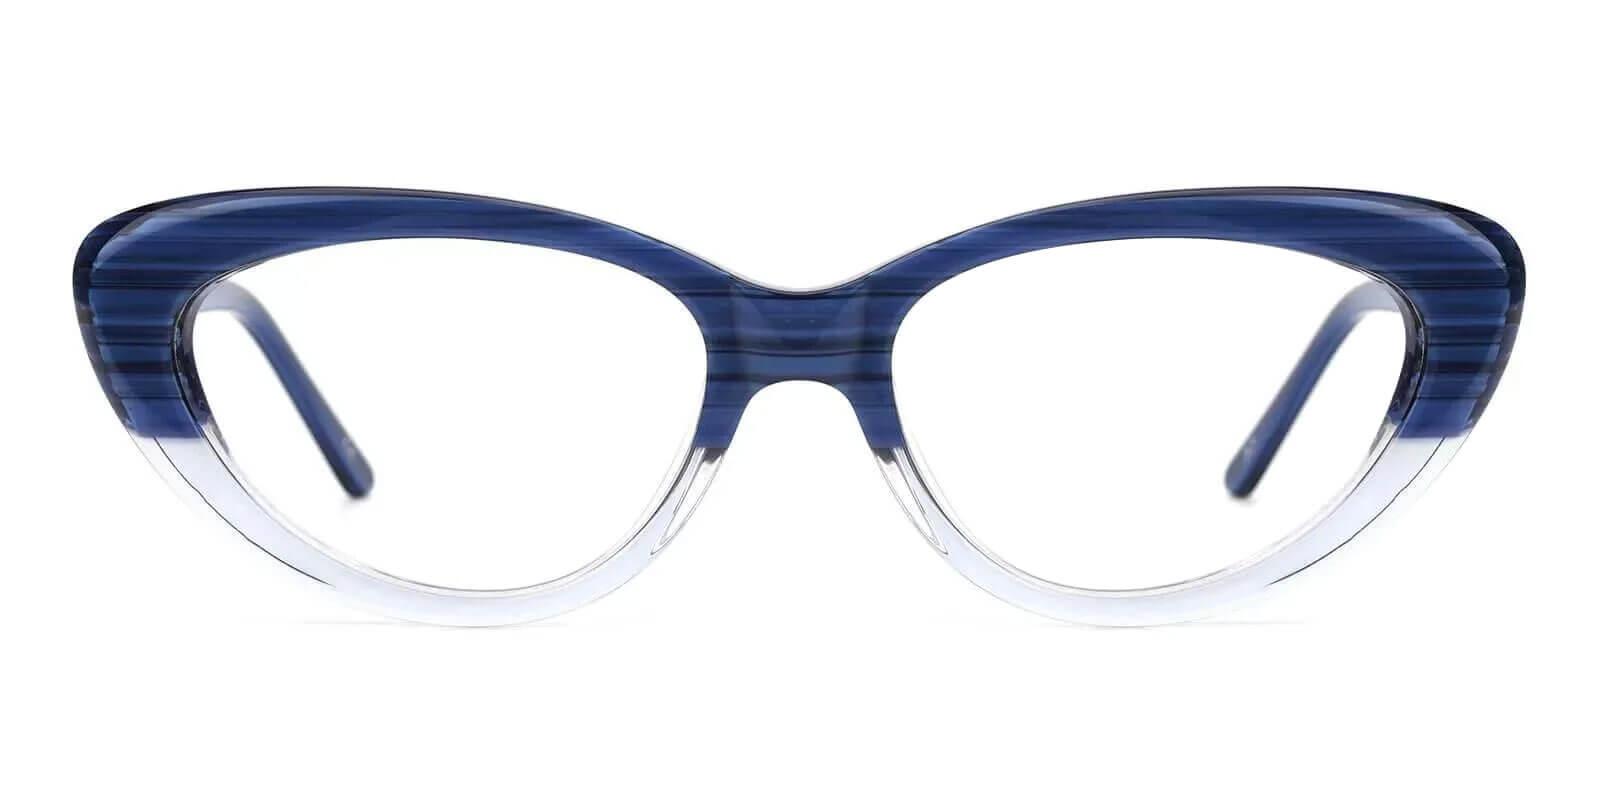 Stella Blue Acetate Eyeglasses , SpringHinges , UniversalBridgeFit Frames from ABBE Glasses